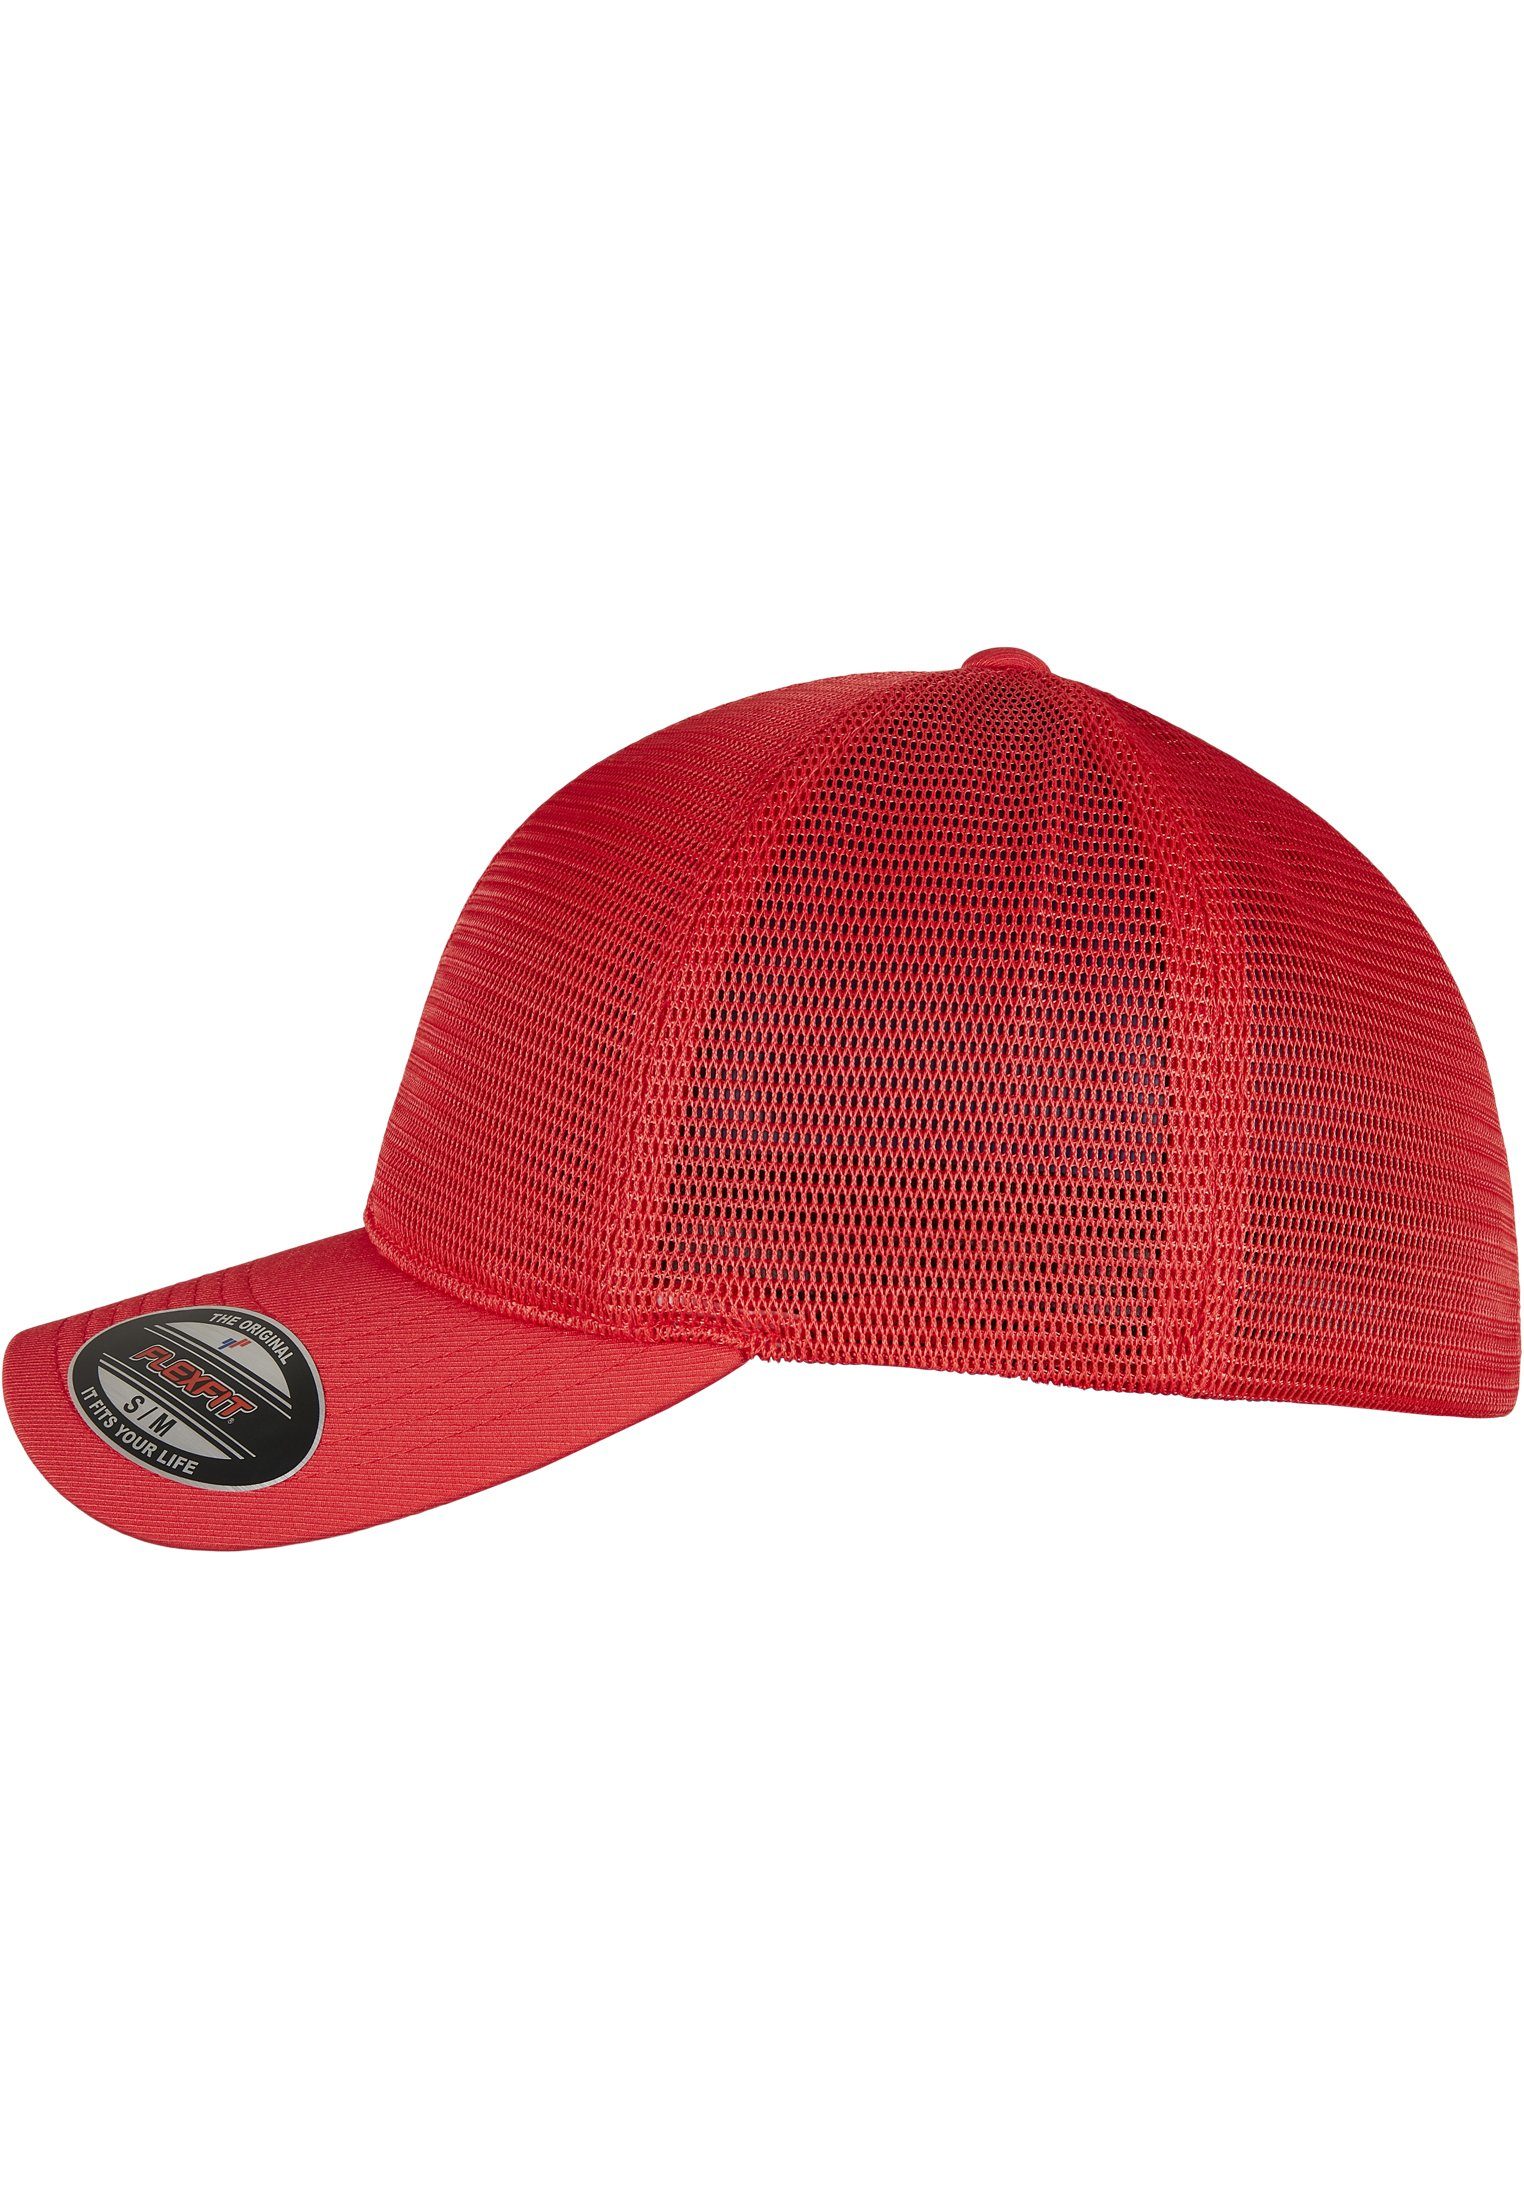 CAP Cap 360 Flex Flexfit FLEXFIT OMNIMESH red Accessoires